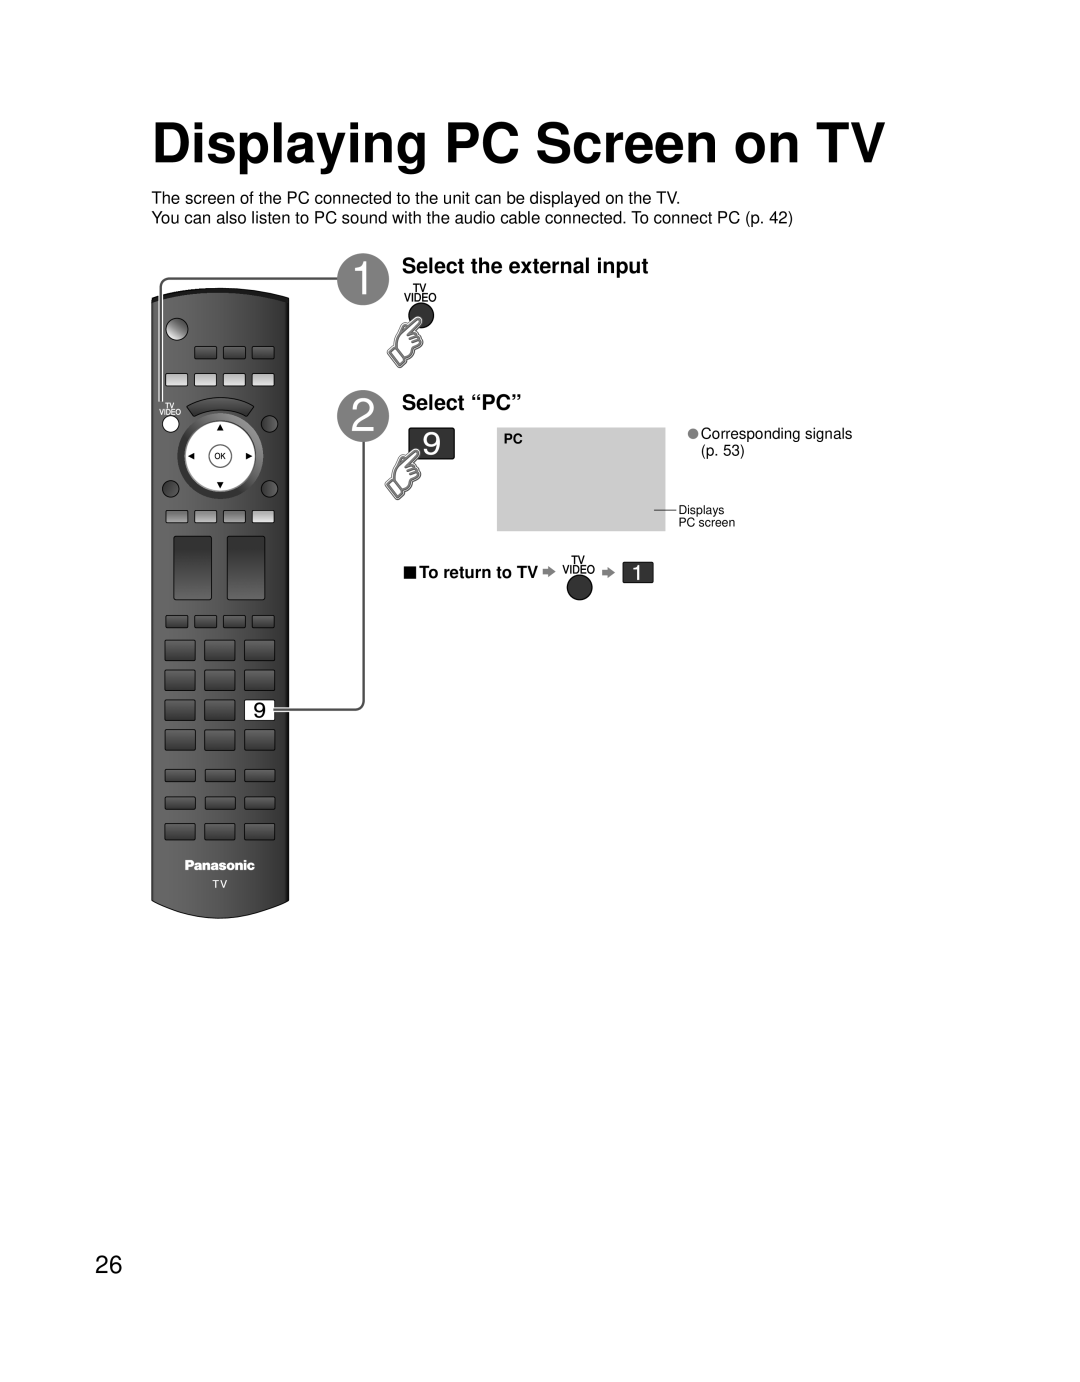 Panasonic TH 58PZ700U, TH 50PZ700U Displaying PC Screen on TV, Select the external input Select “PC”, To return to TV 